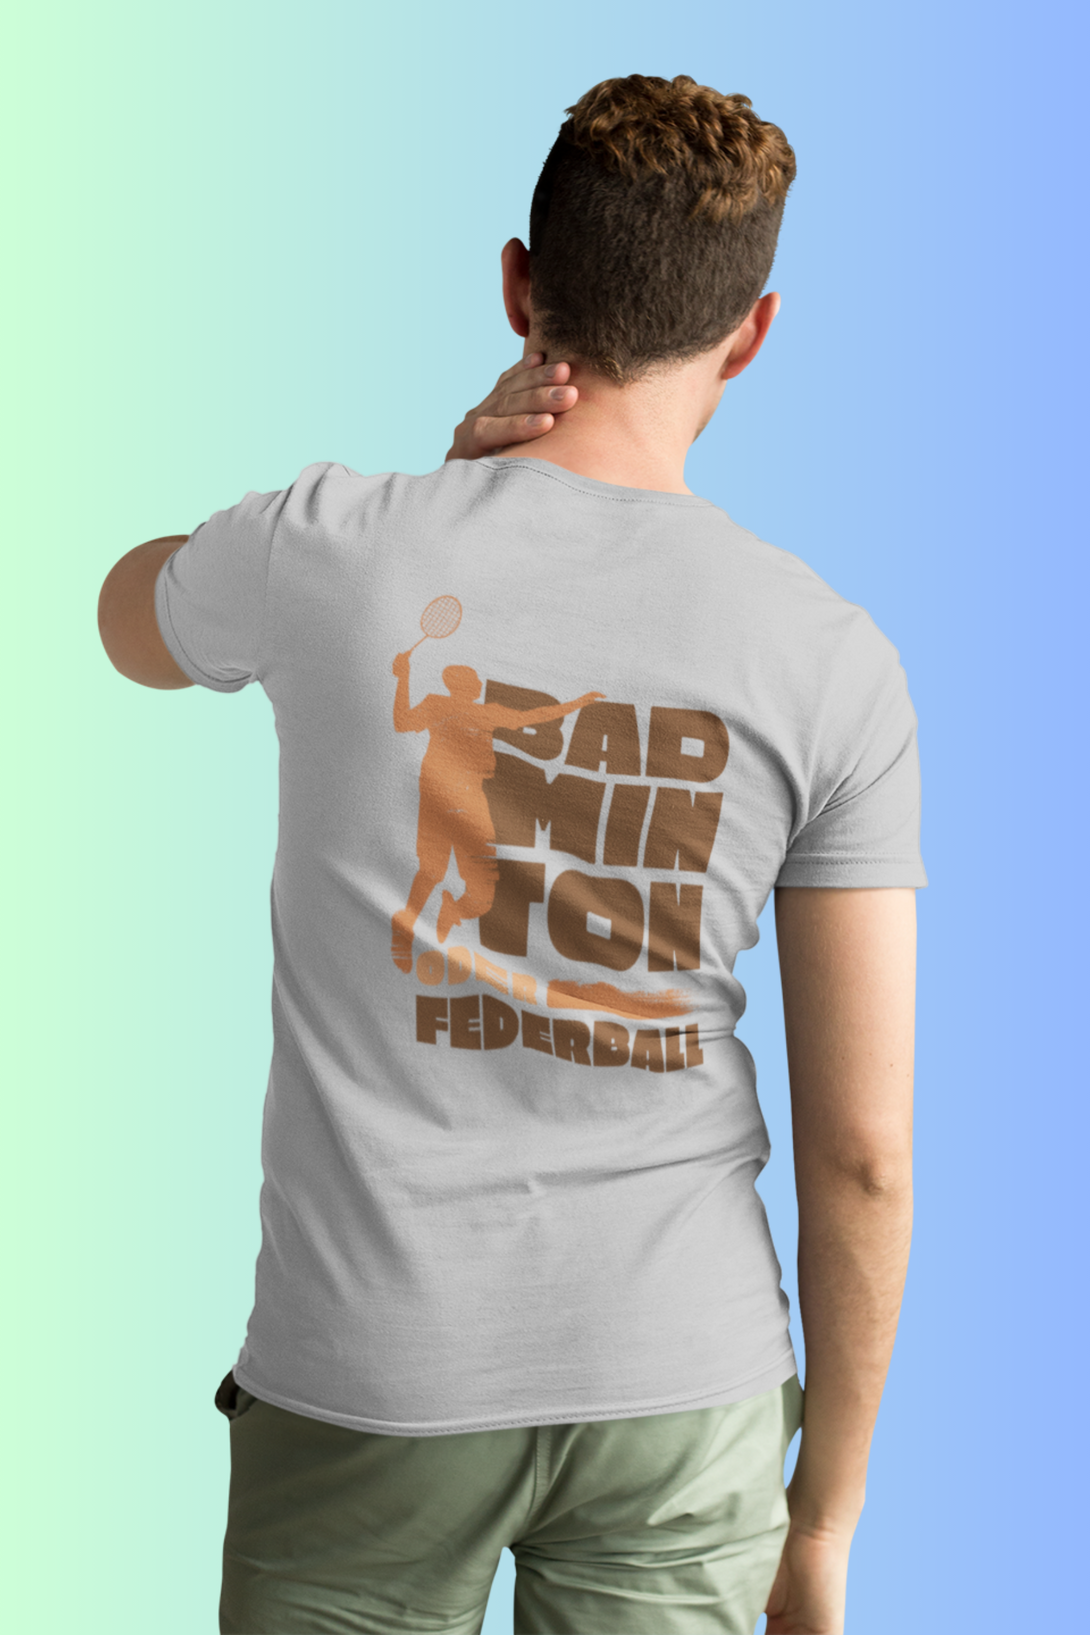 Badminton Player Printed T-Shirt For Men - WowWaves - 6